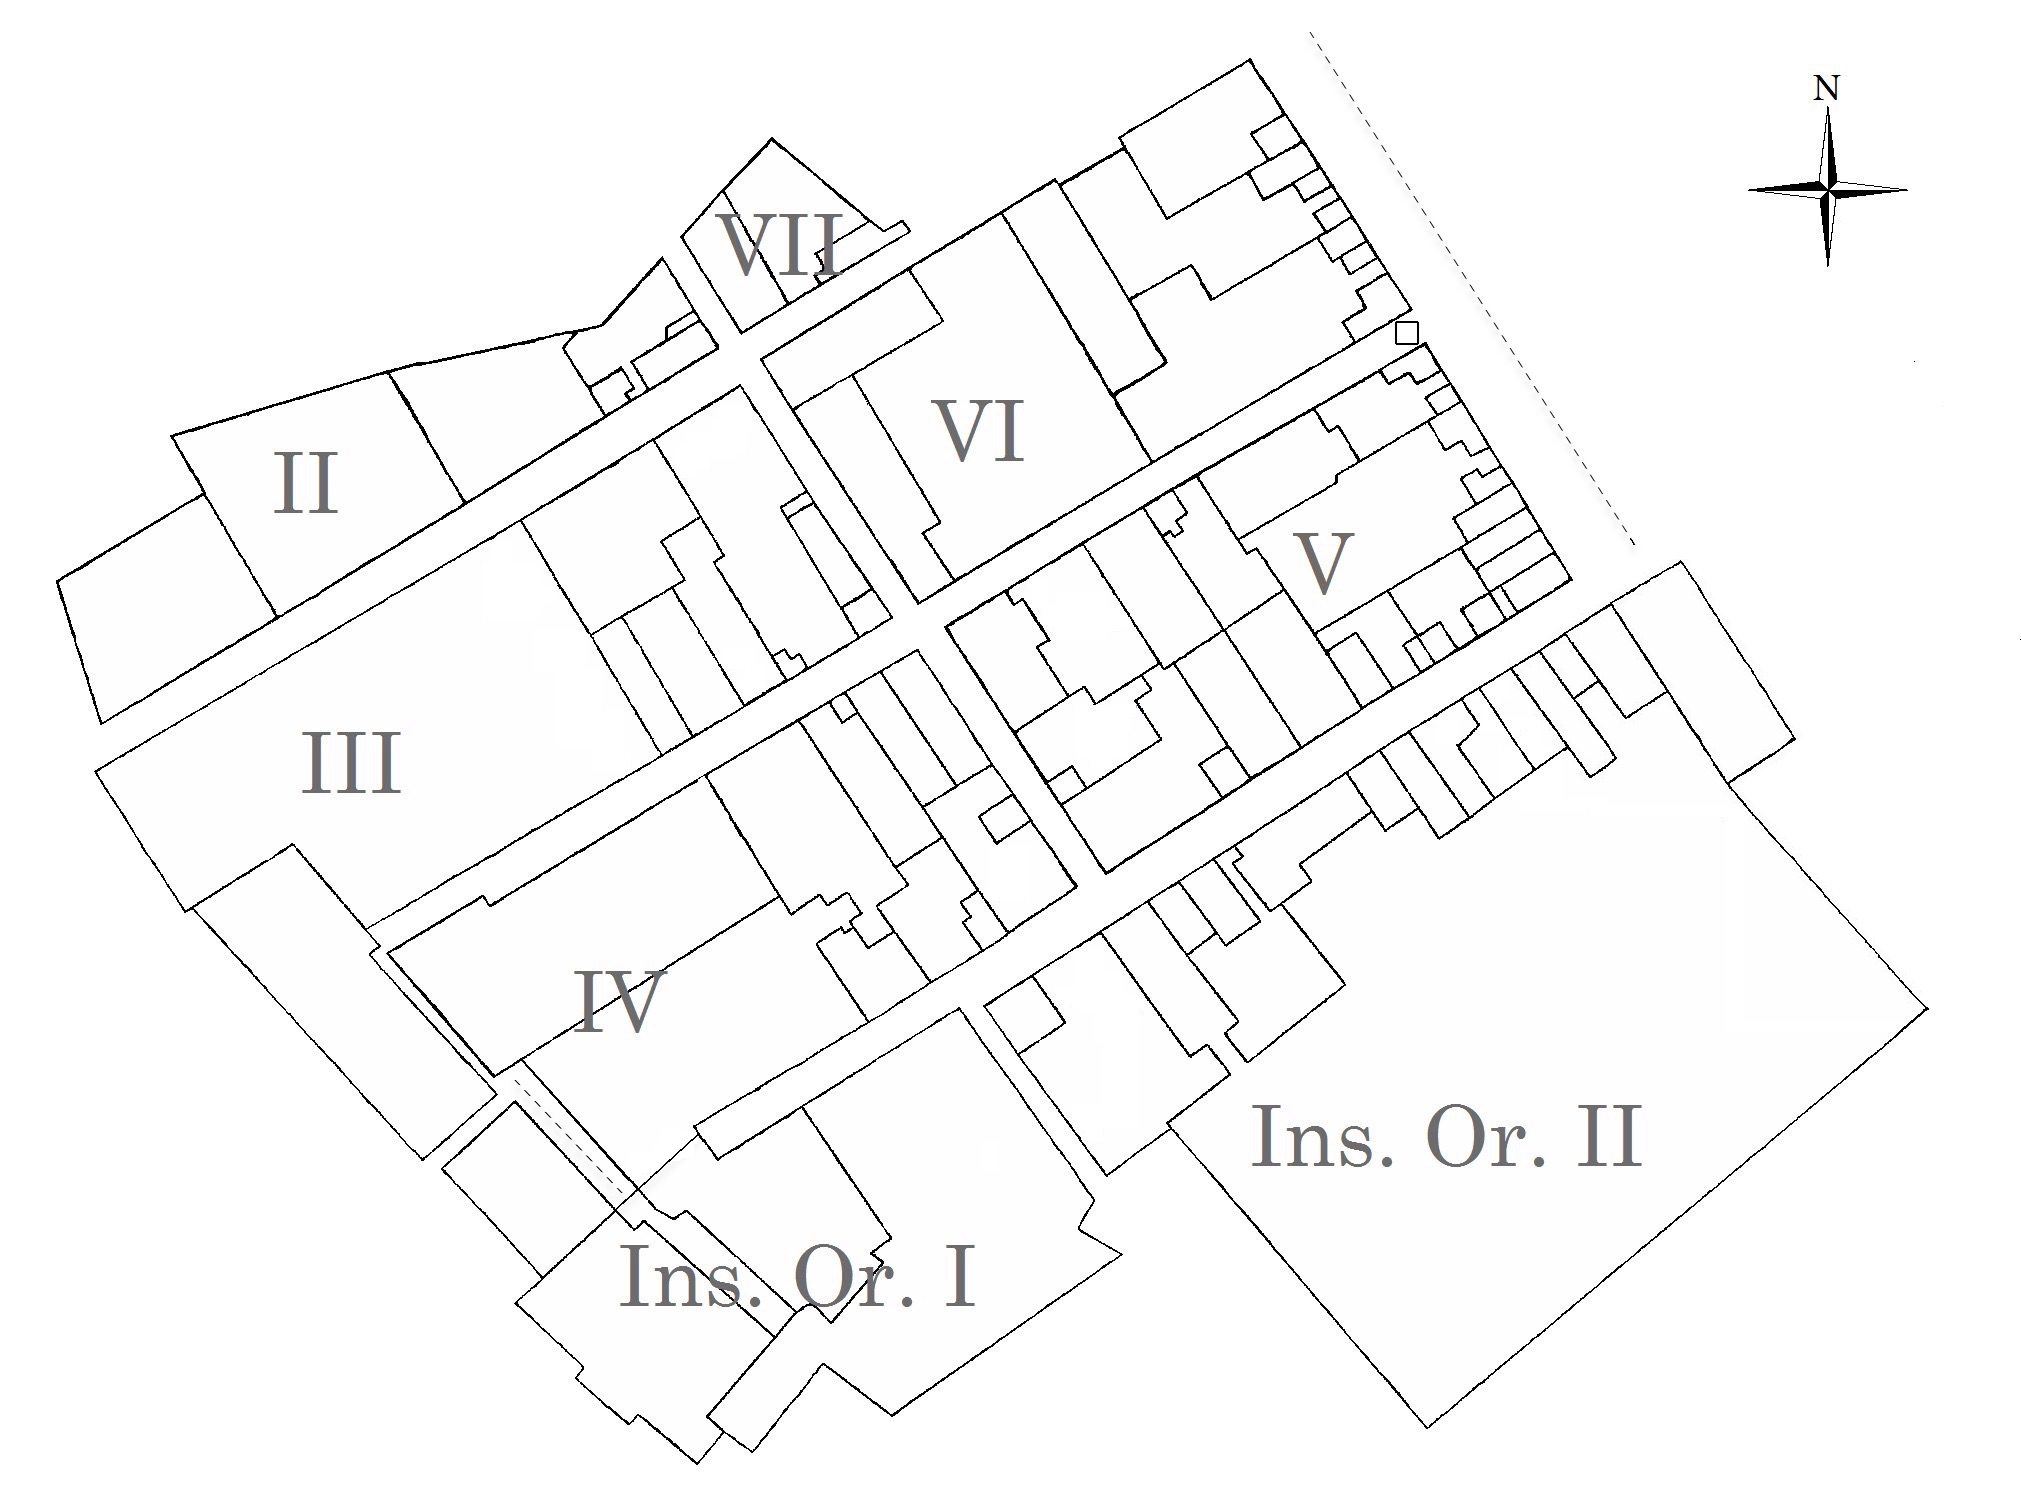 Map of Herculaneum properties